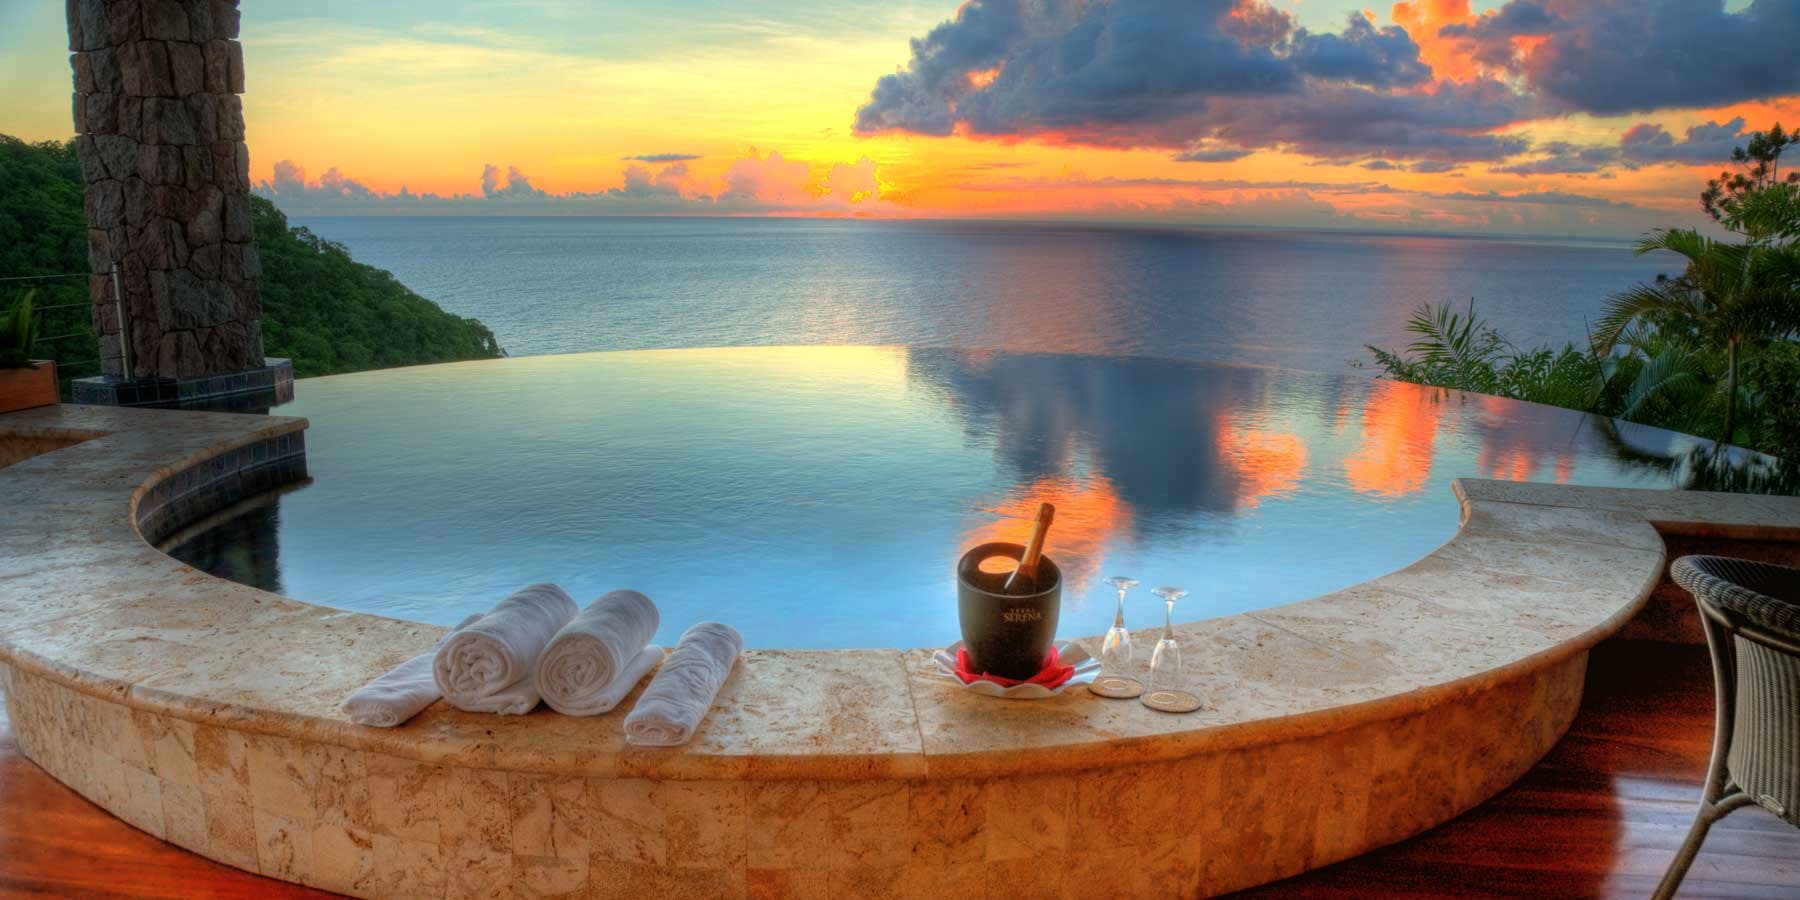 Luxury hotels in St Lucia